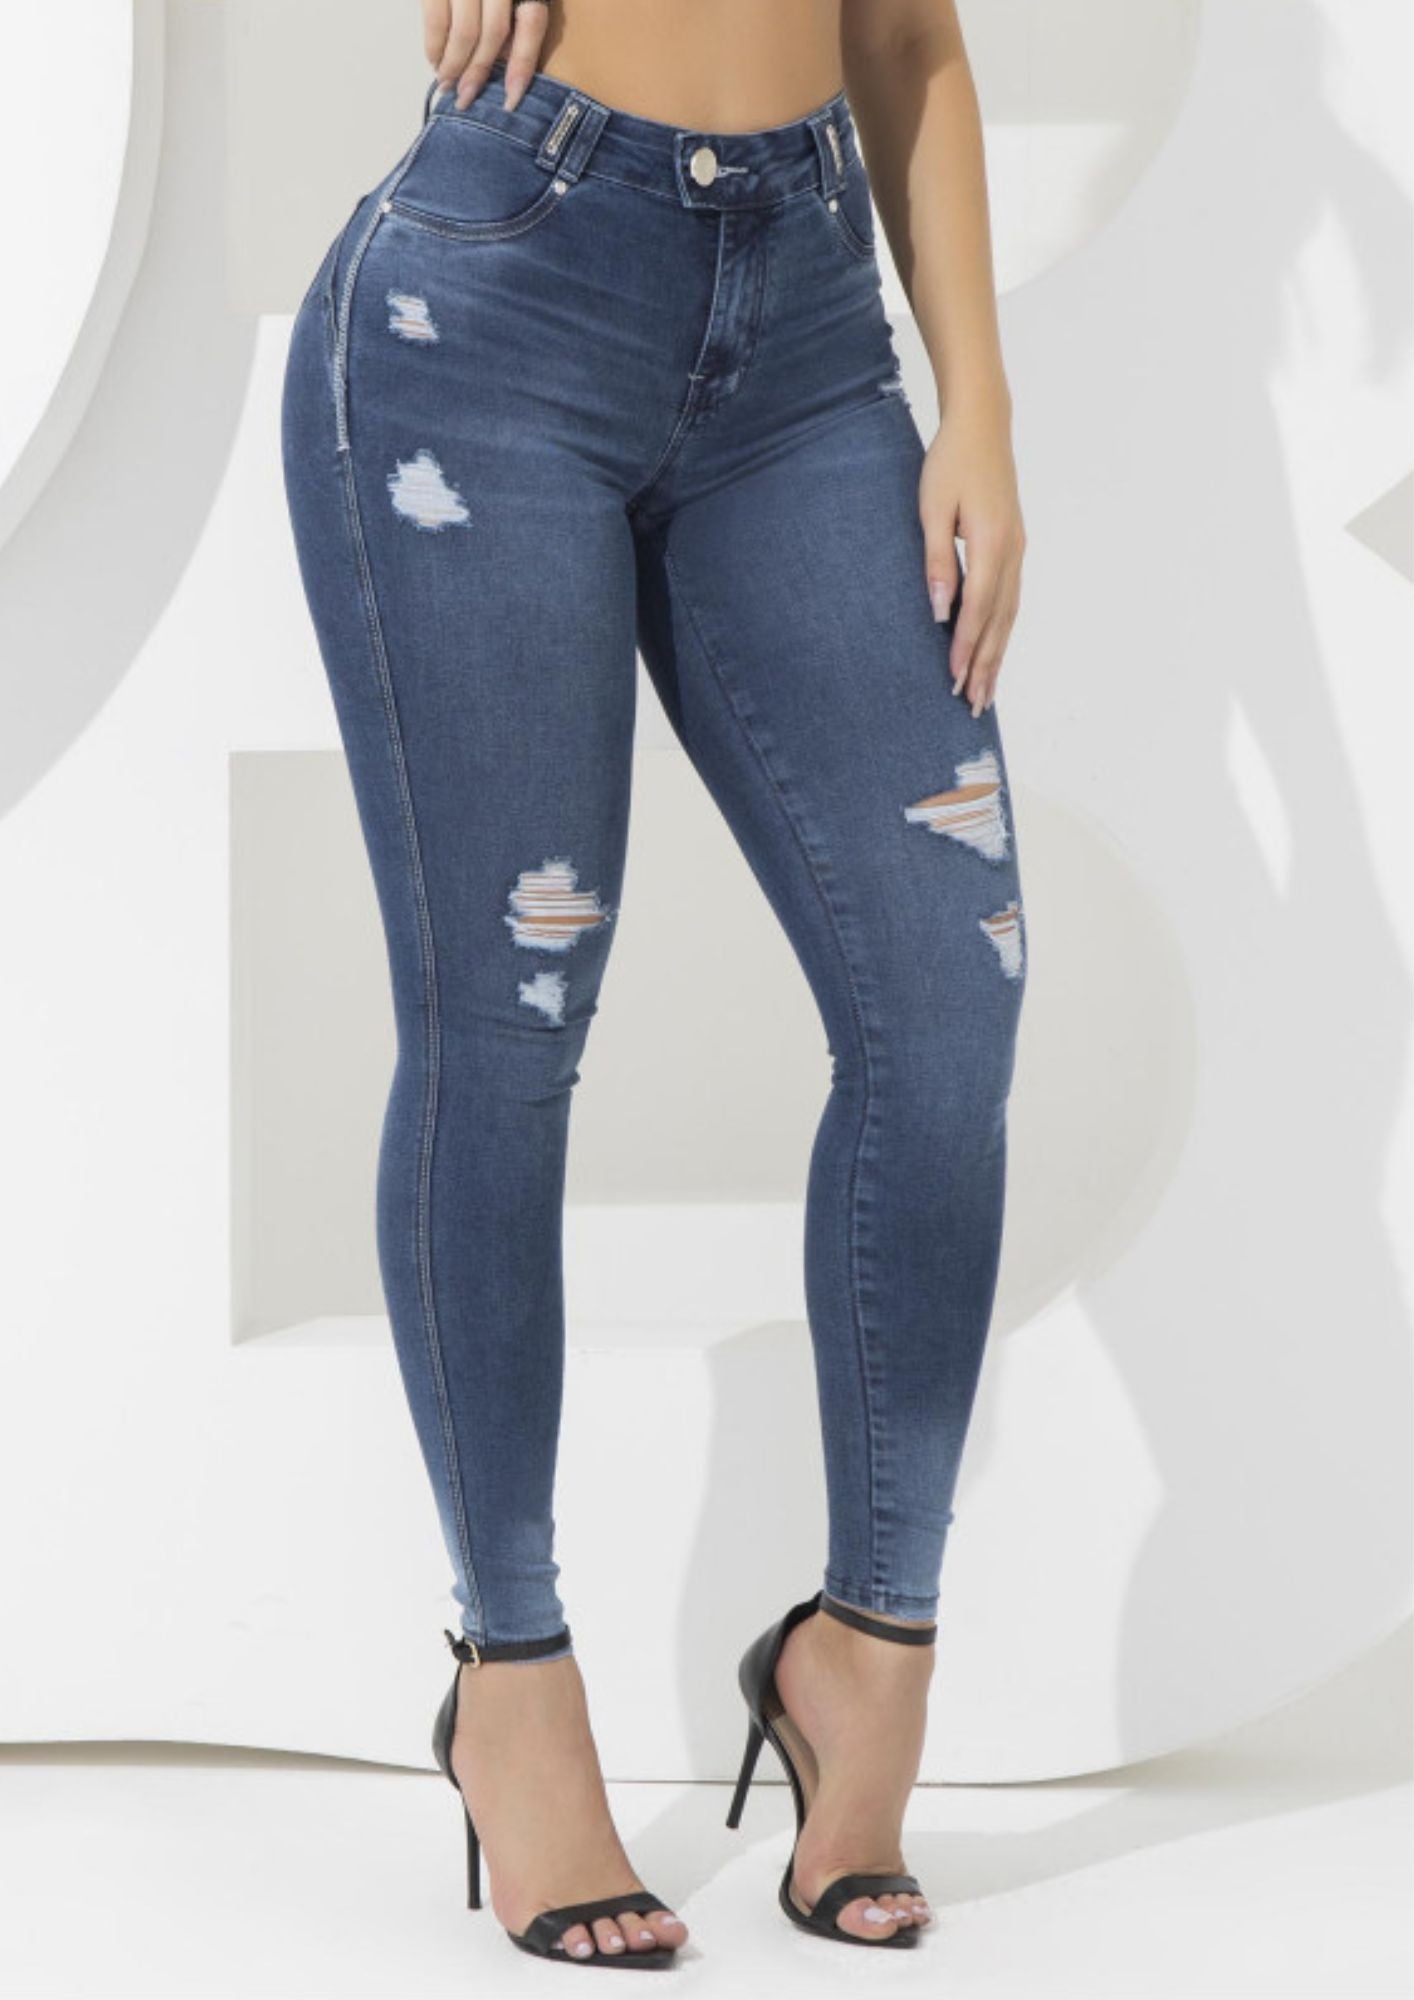 Calça jeans justa empina bumbum modeladora de curvas